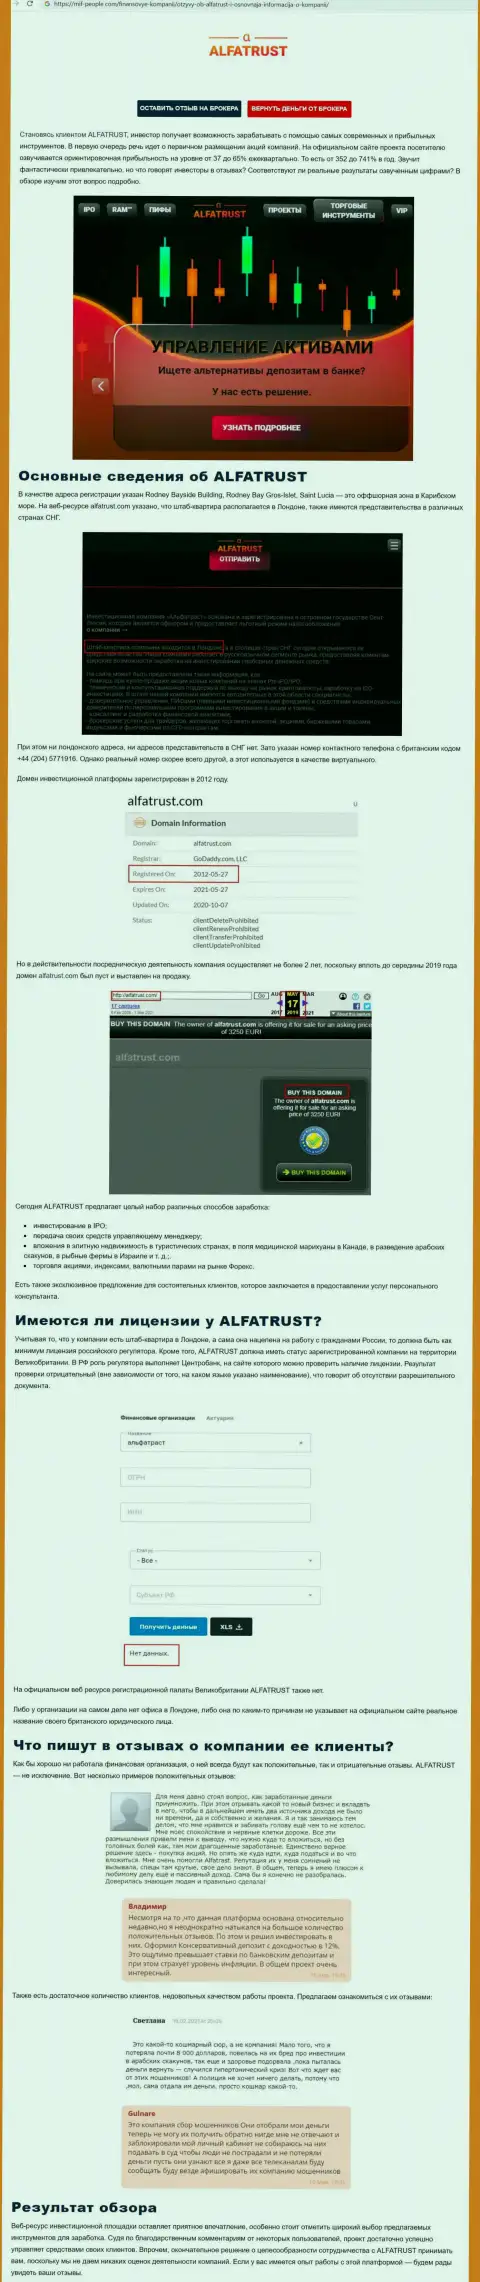 Онлайн-ресурс Миф-Пеопле Ком опубликовал информацию о форекс дилере Alfa Trust